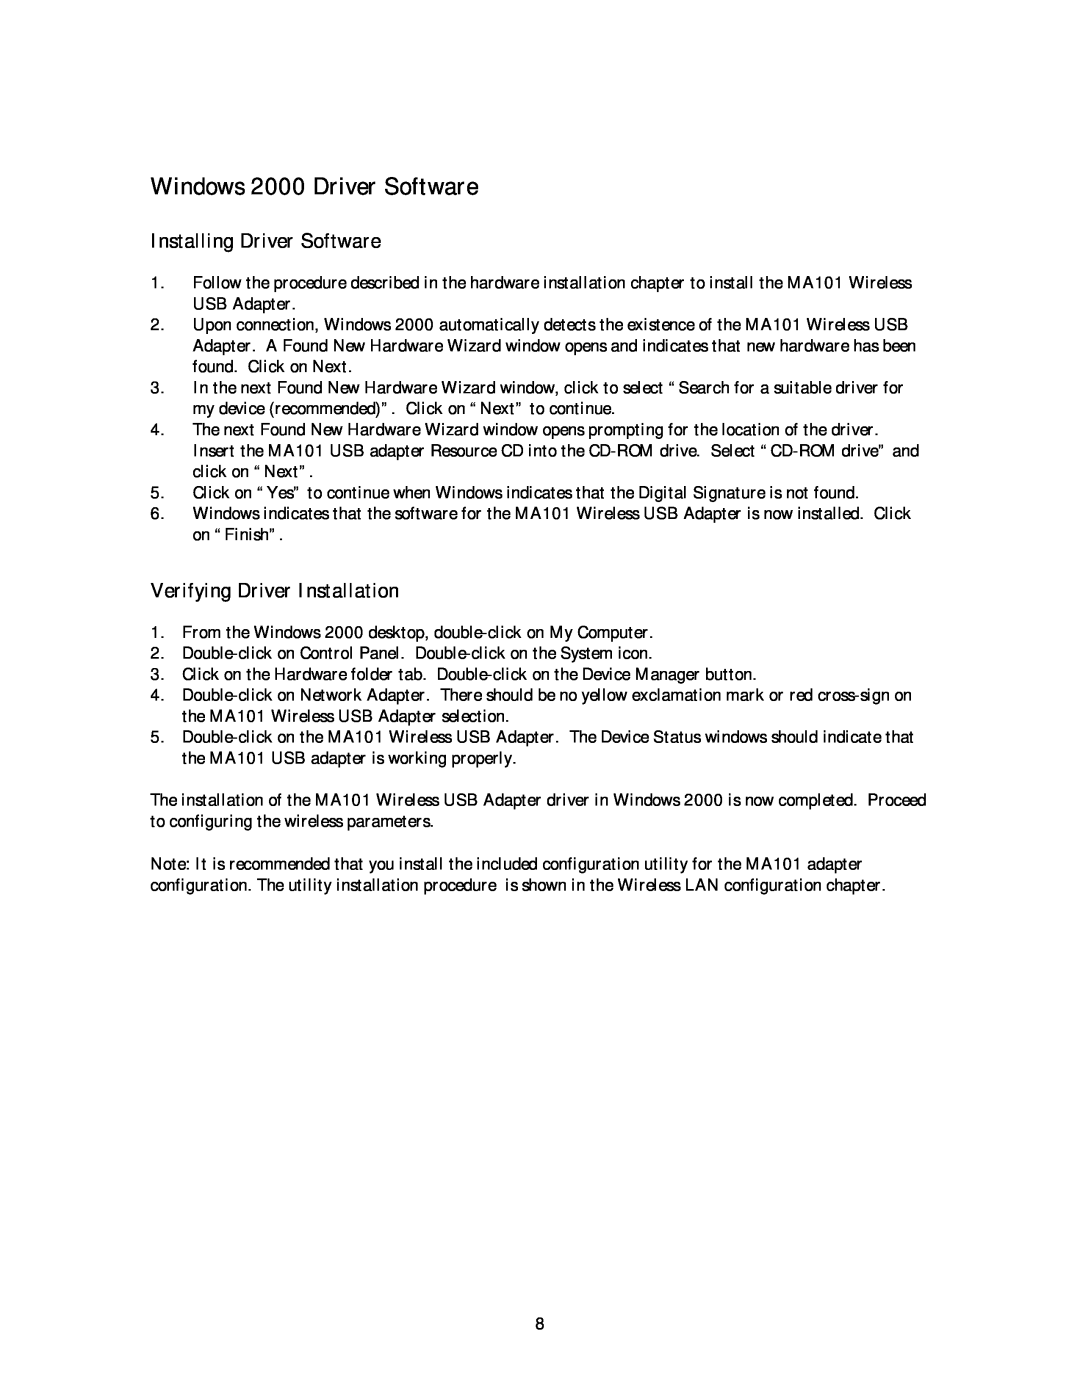 NETGEAR MA 101 manual Windows 2000 Driver Software, Installing Driver Software, Verifying Driver Installation 